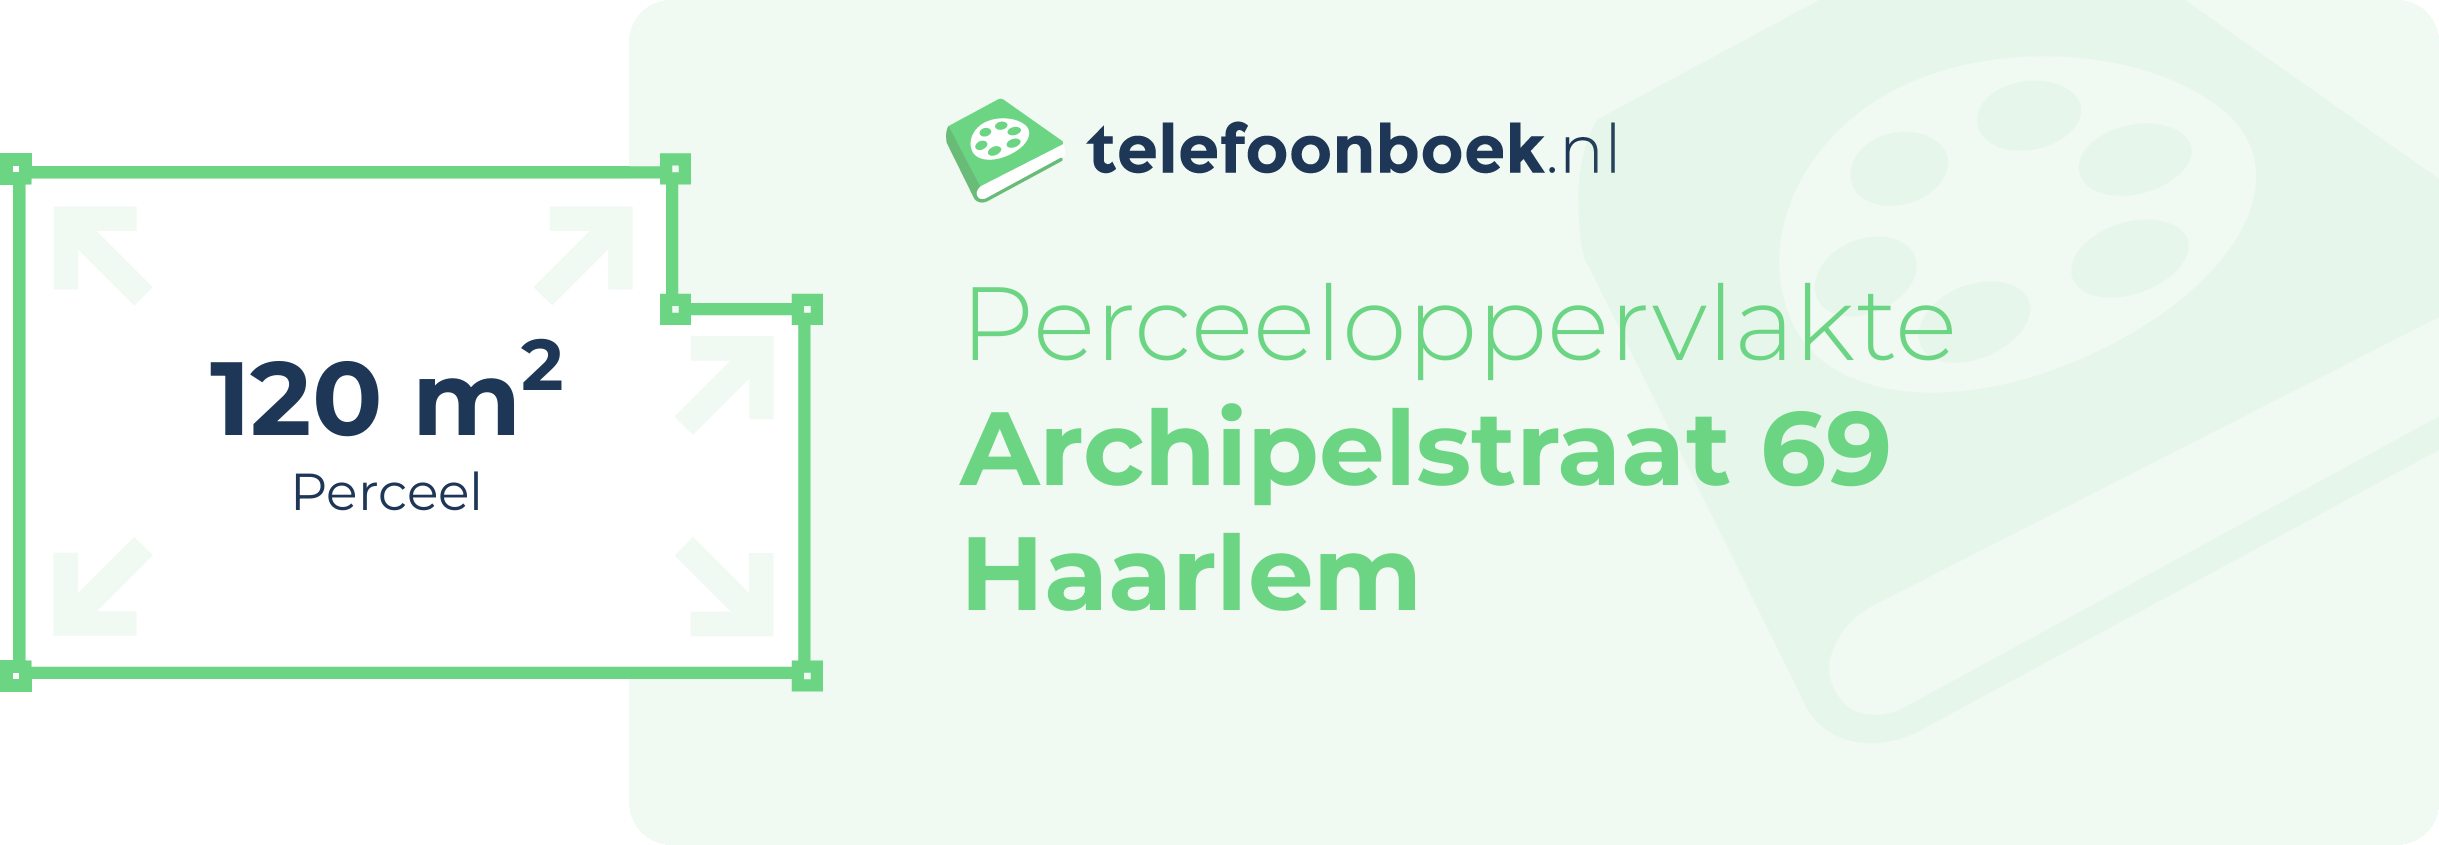 Perceeloppervlakte Archipelstraat 69 Haarlem